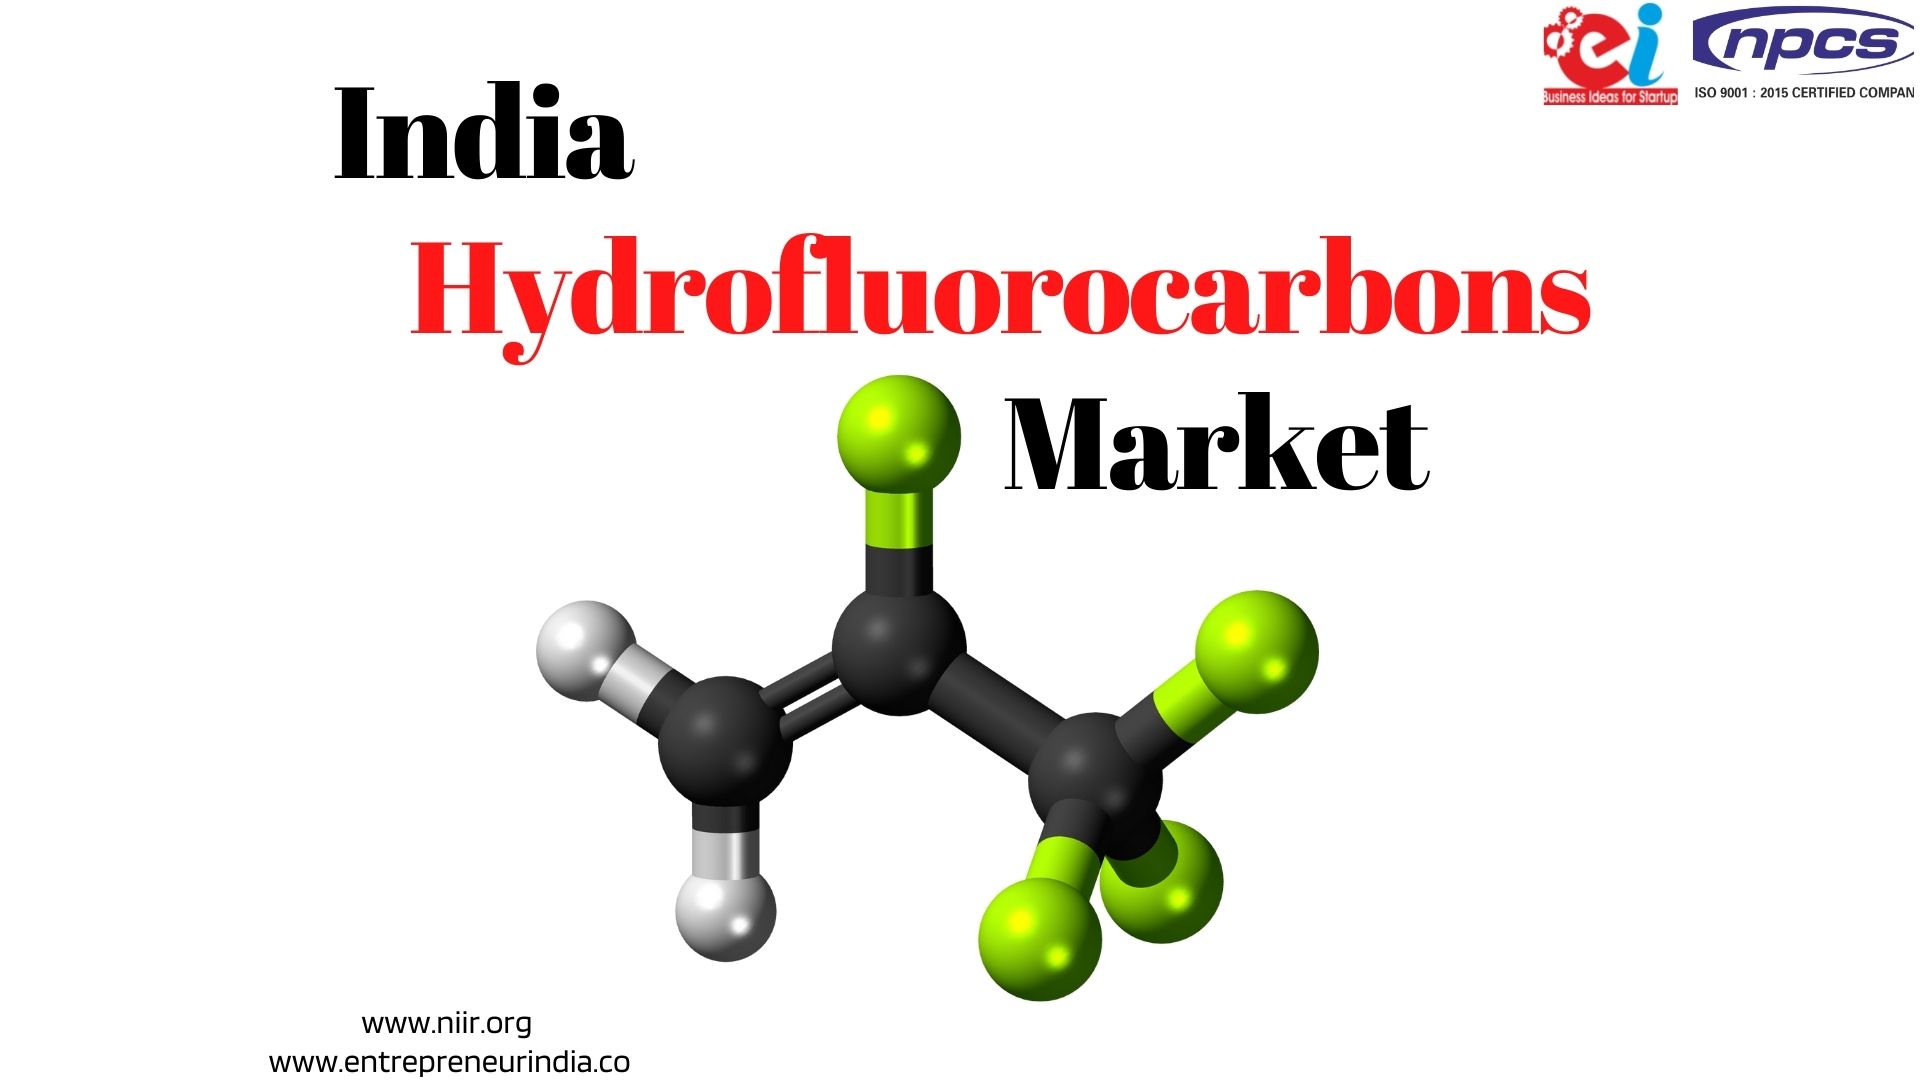 India Hydrofluorocarbons Market